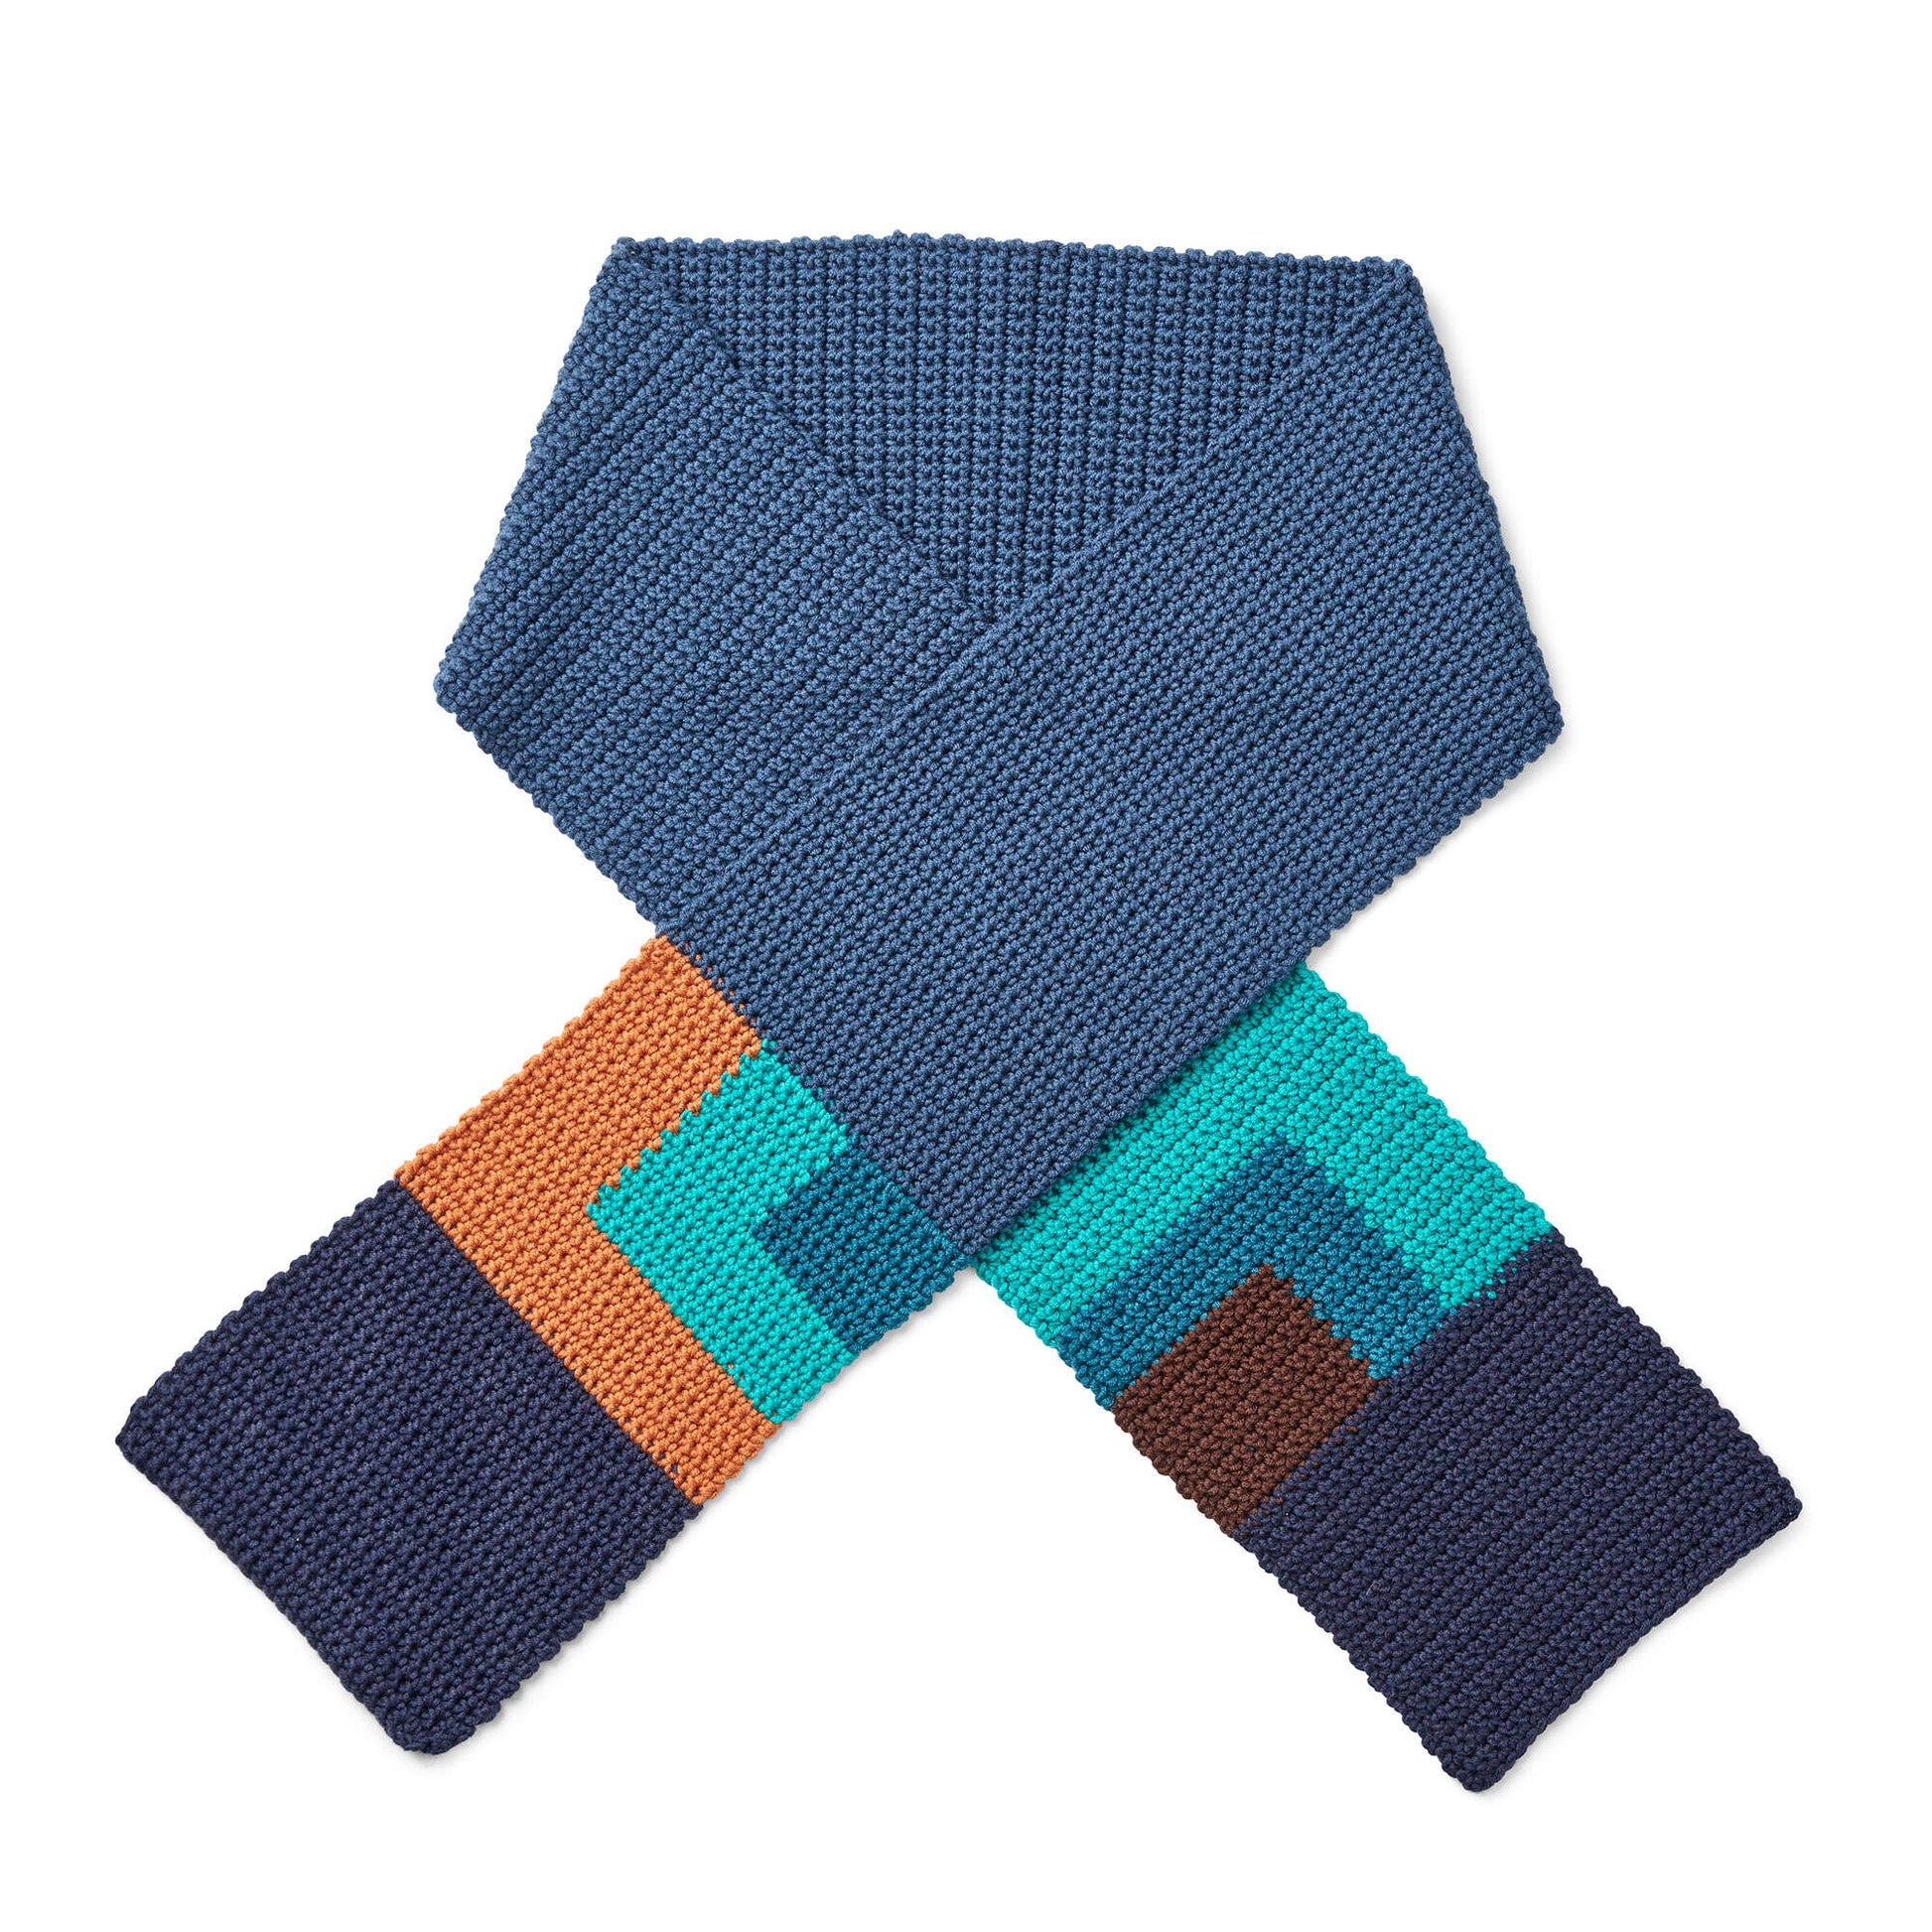 Free Caron X Pantone Color Block Crochet Scarf Pattern